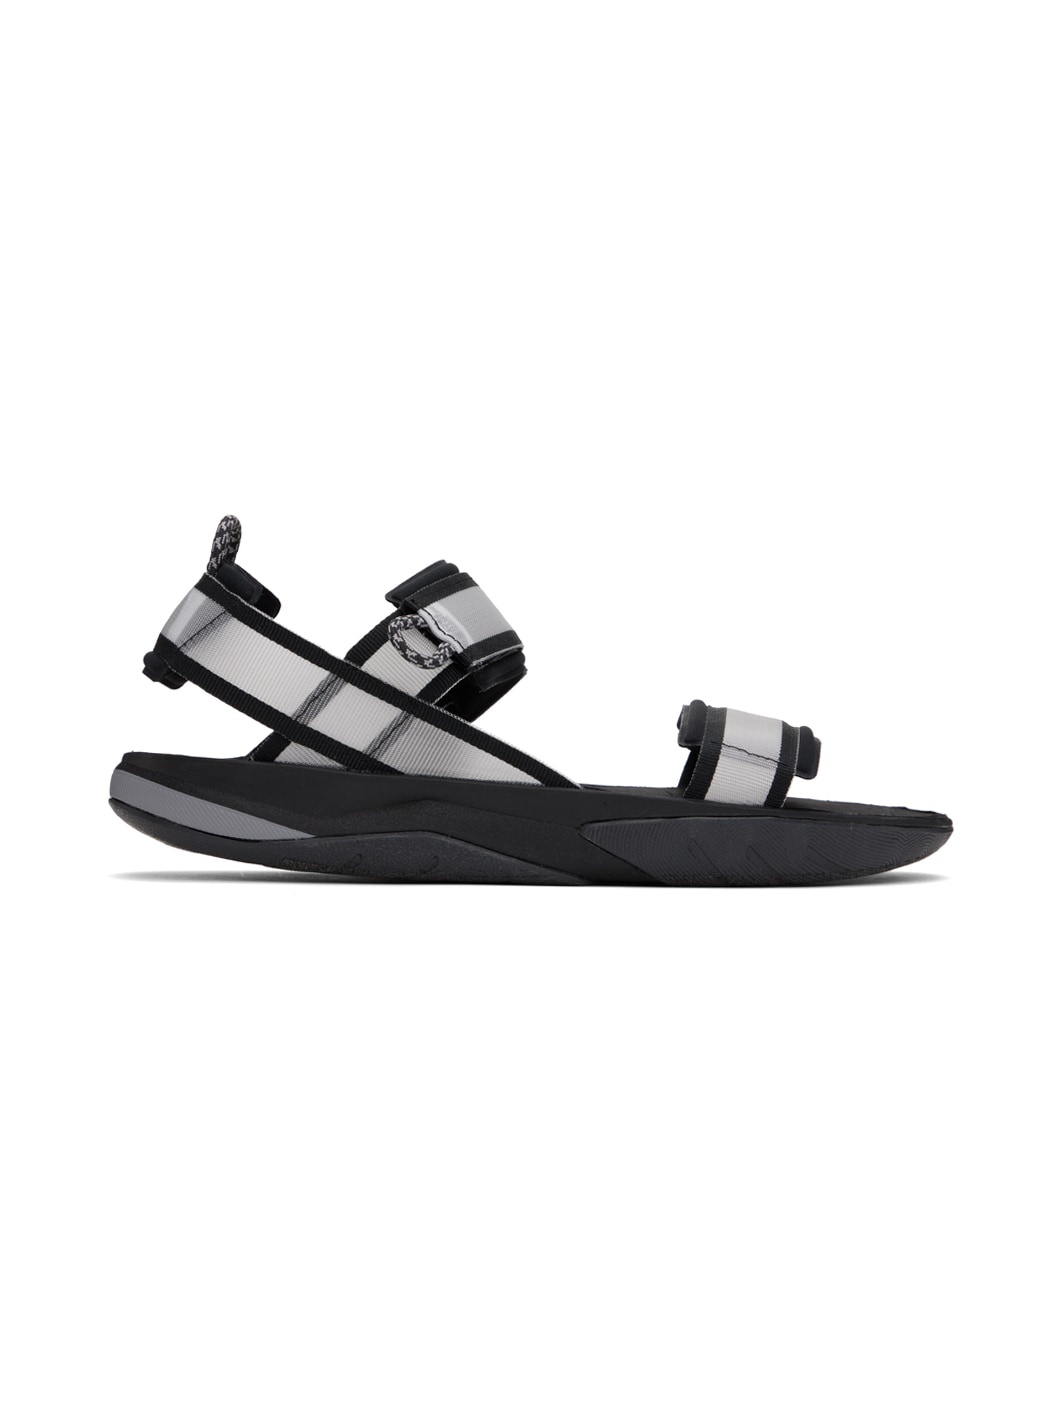 Gray & Black Skeena Sandals - 1